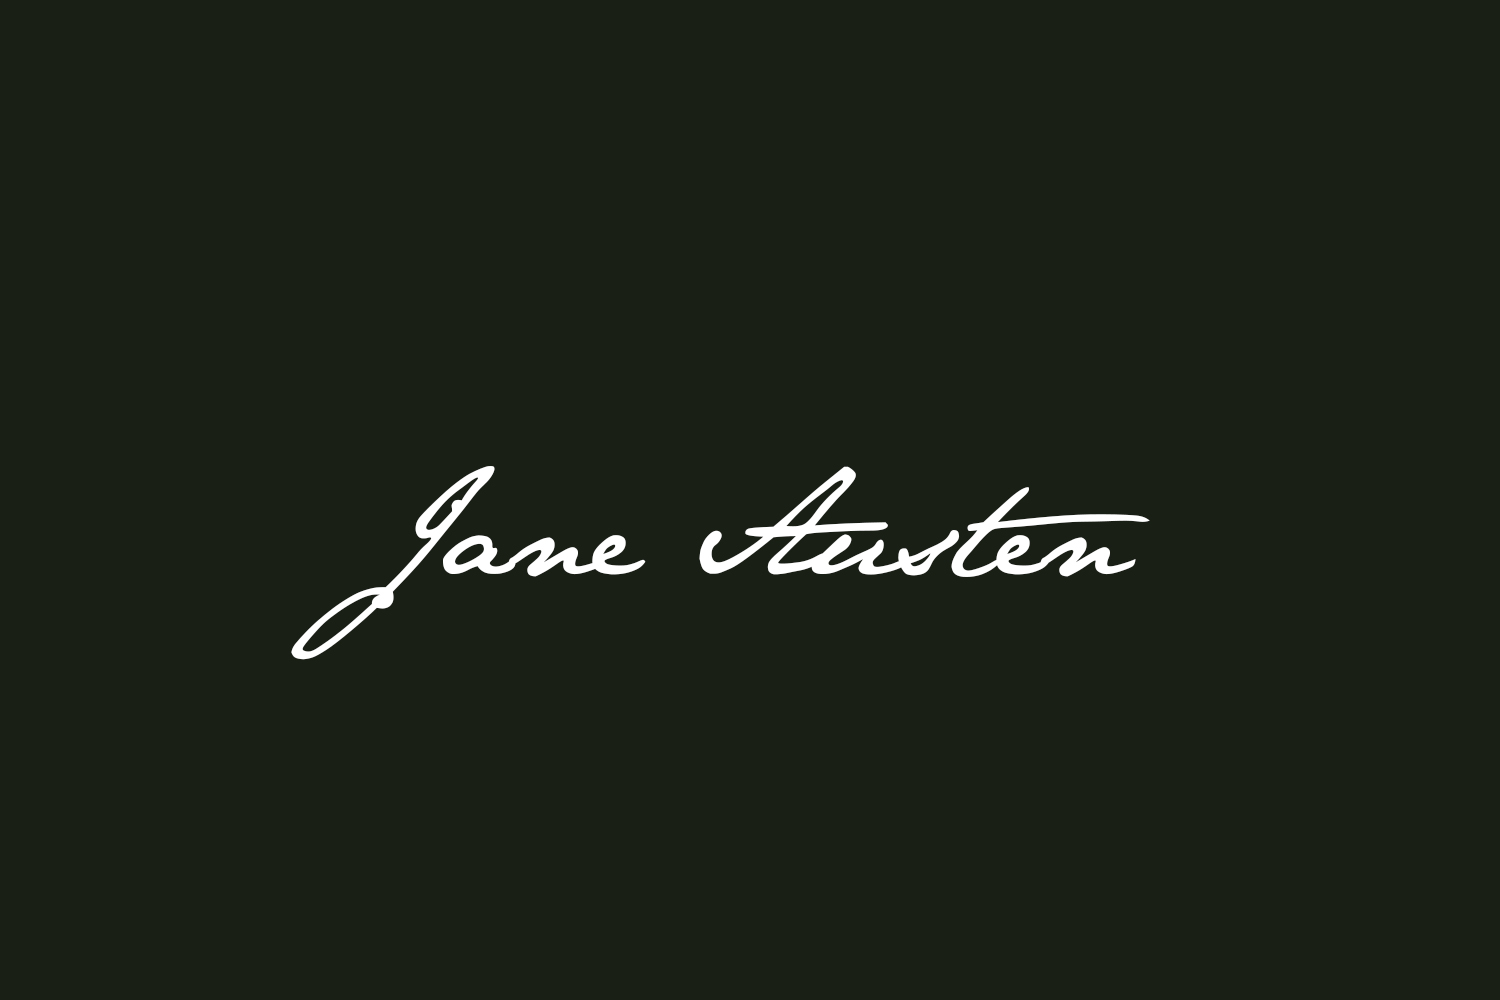 Jane Austen Free Font